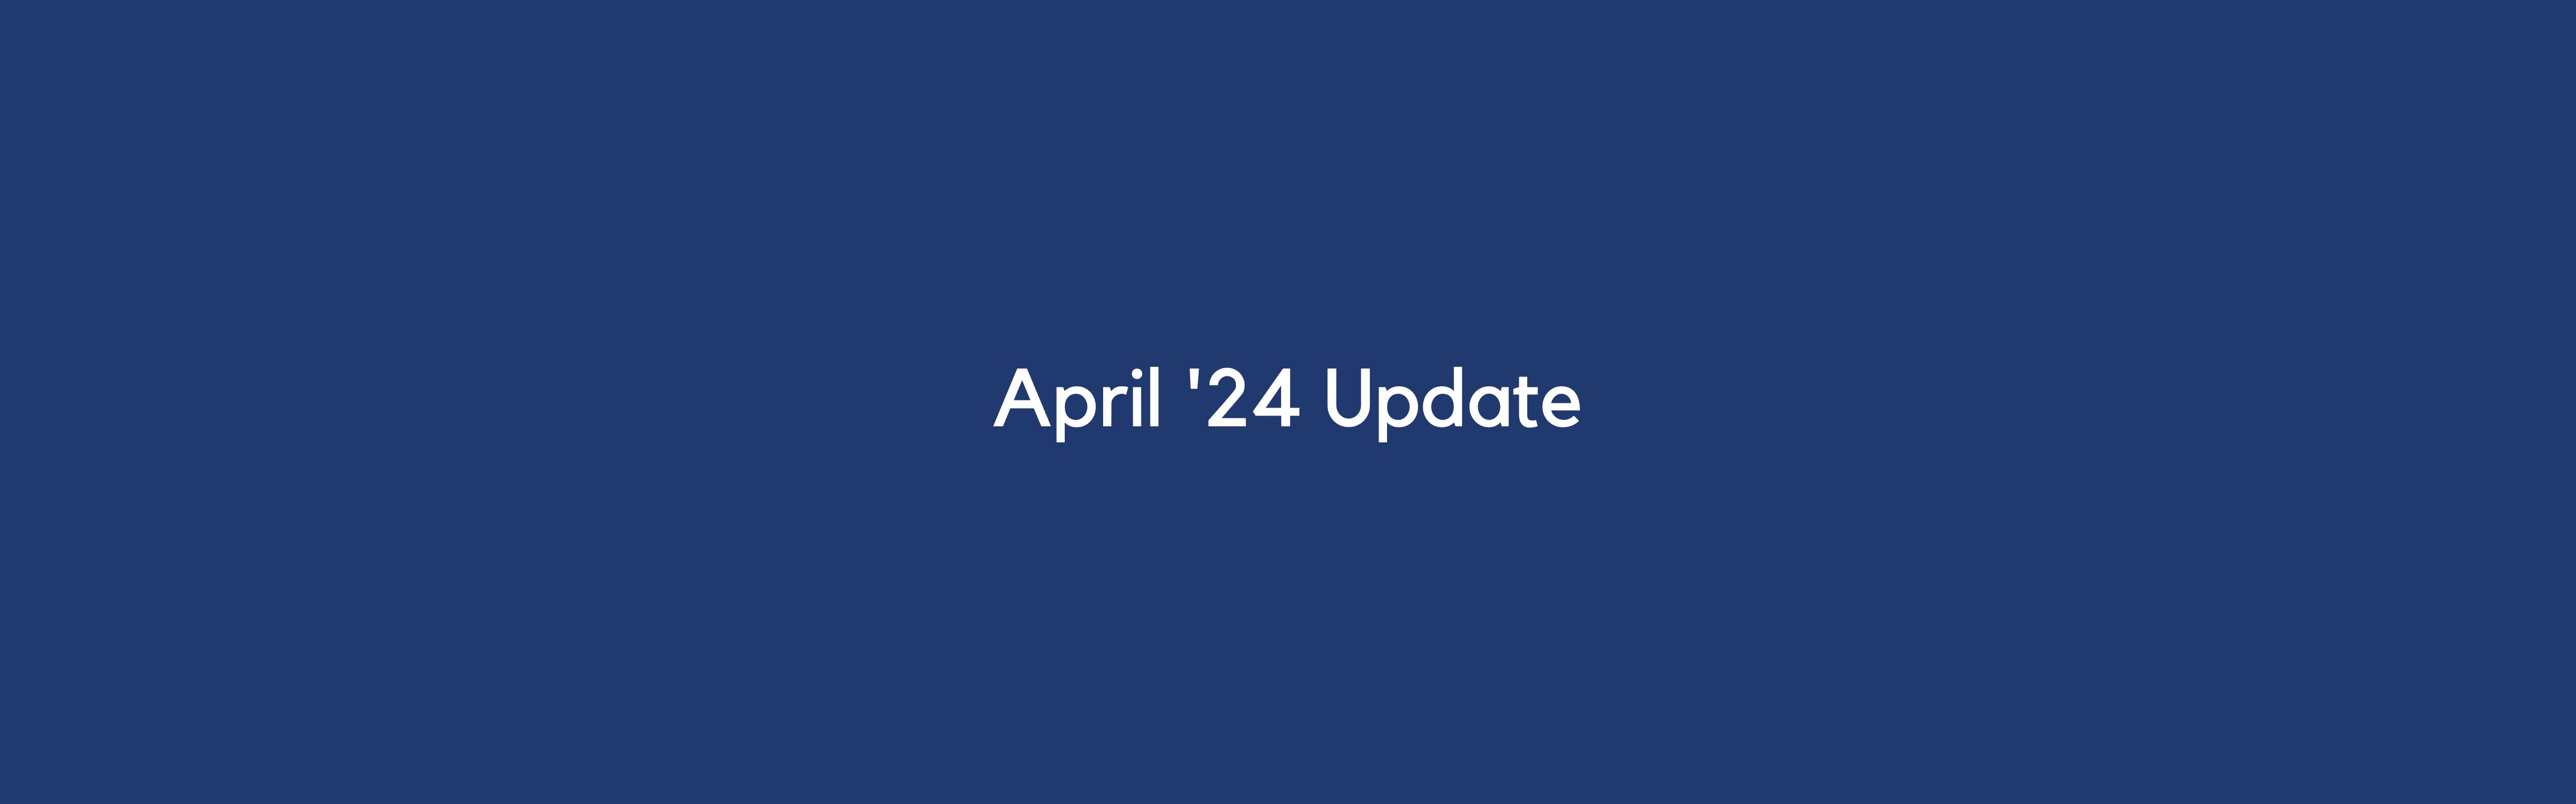 april-24-update